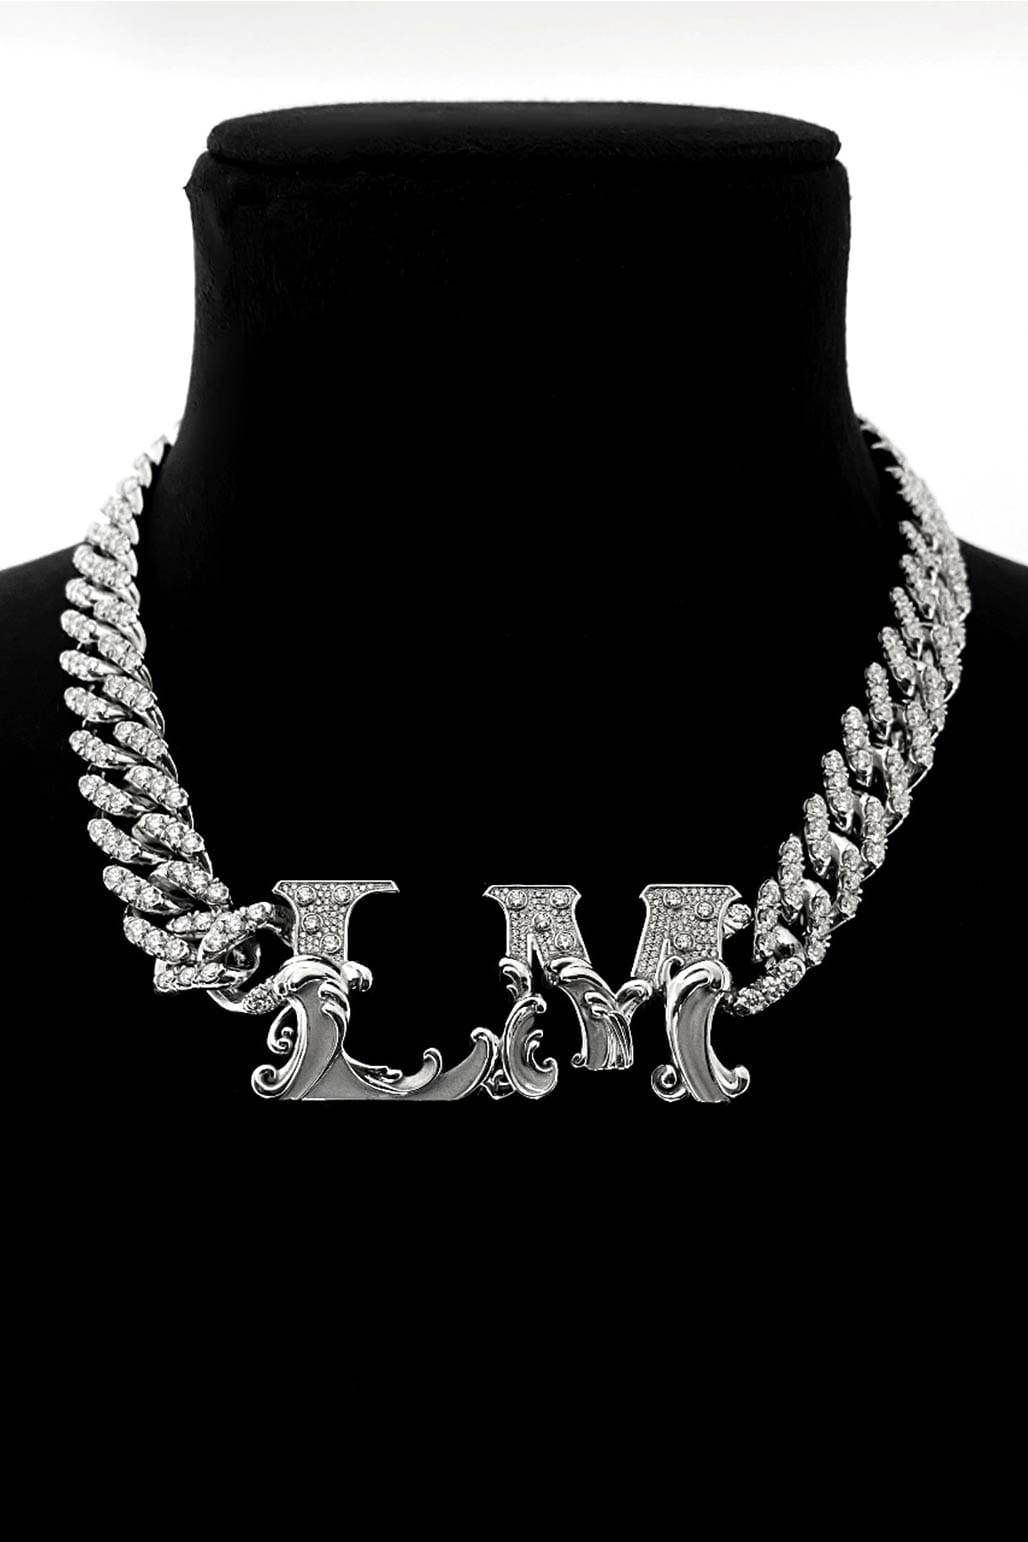 BLACKPINK's Lisa wears a 430 million won diamond necklace and looks amazing